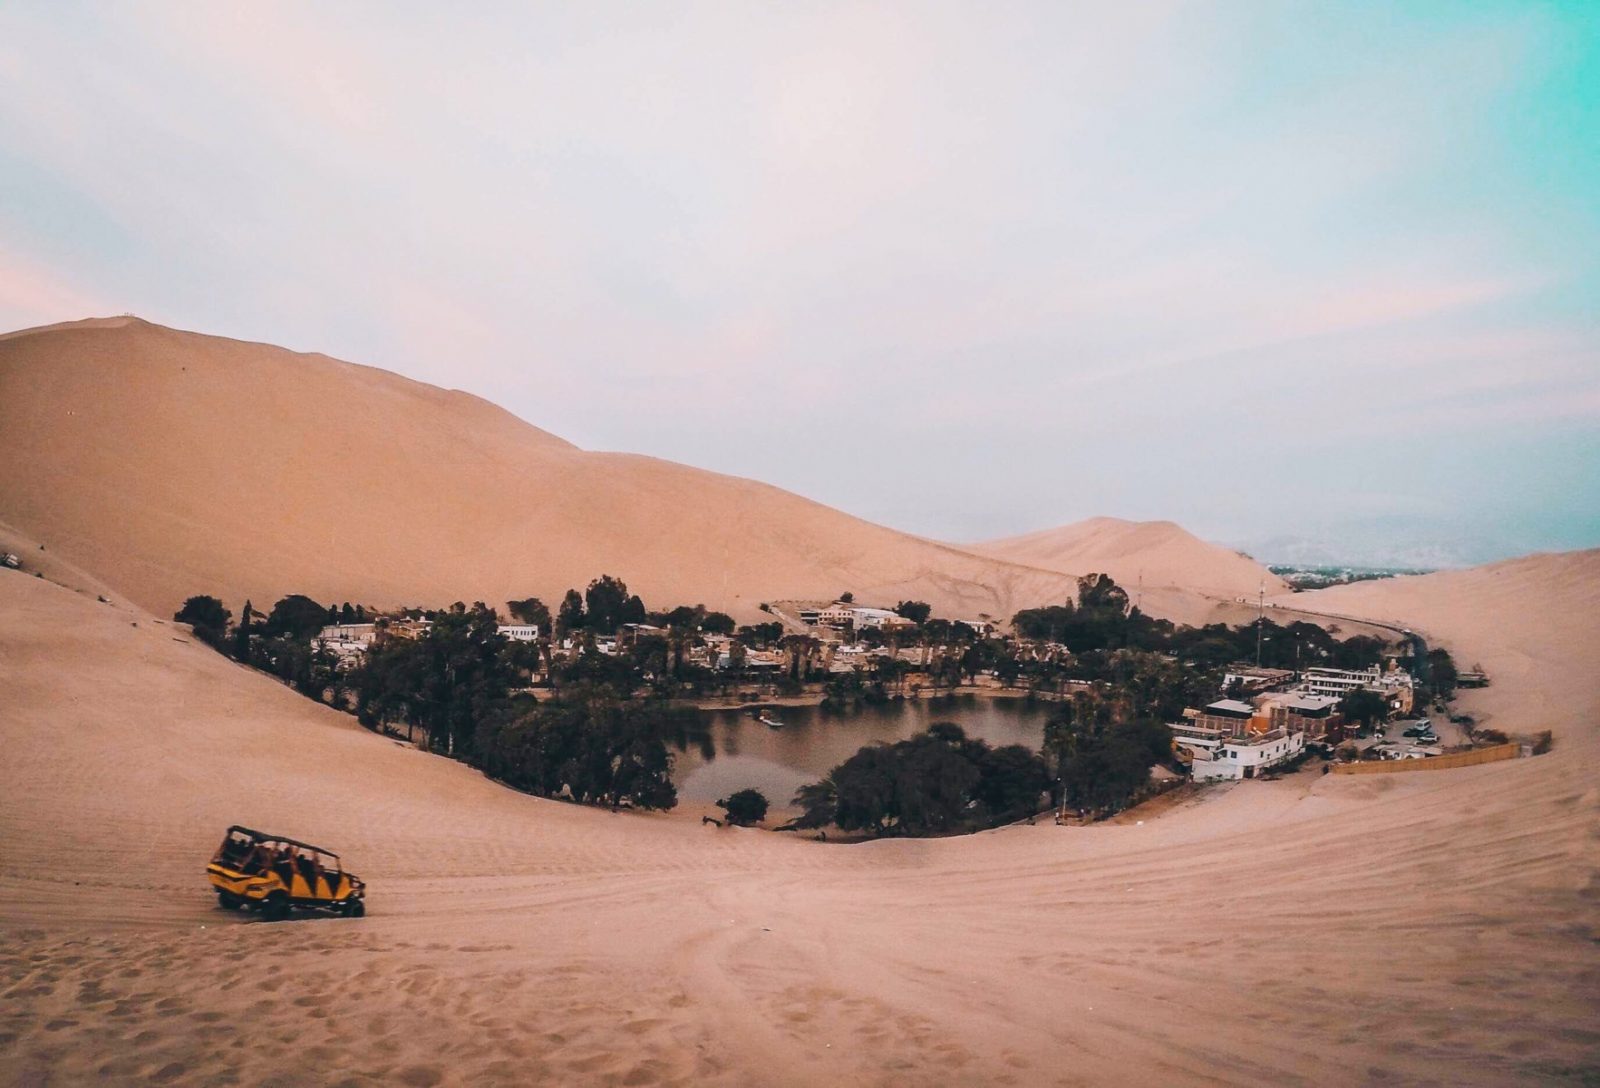 Sandboarding in the desert oasis of Peru